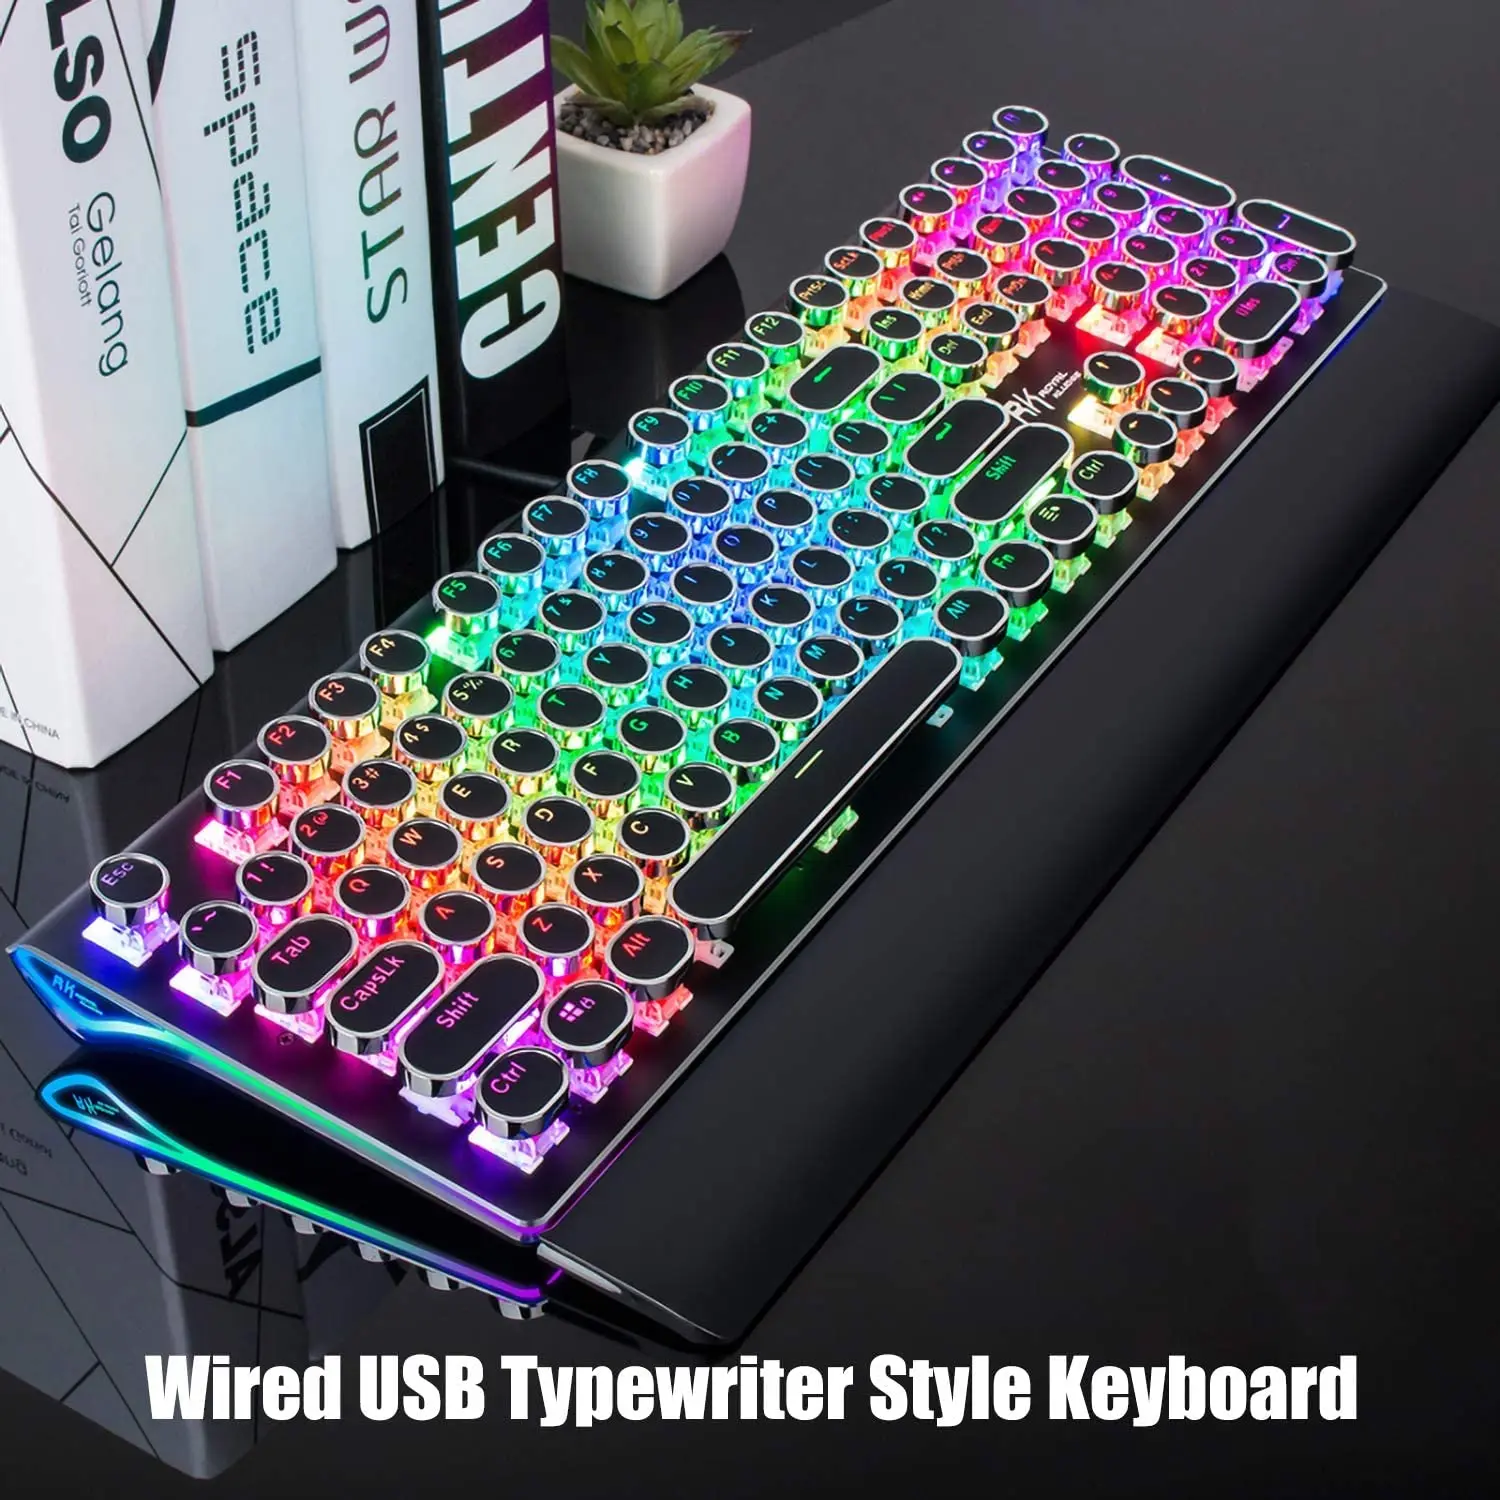 

RK ROYAL KLUDGE S108 Mechanical Keyboard 108 Keys Wired RGB Backlit Typewriter Retro Gamer Keyboard with Collapsible Wrist Rest